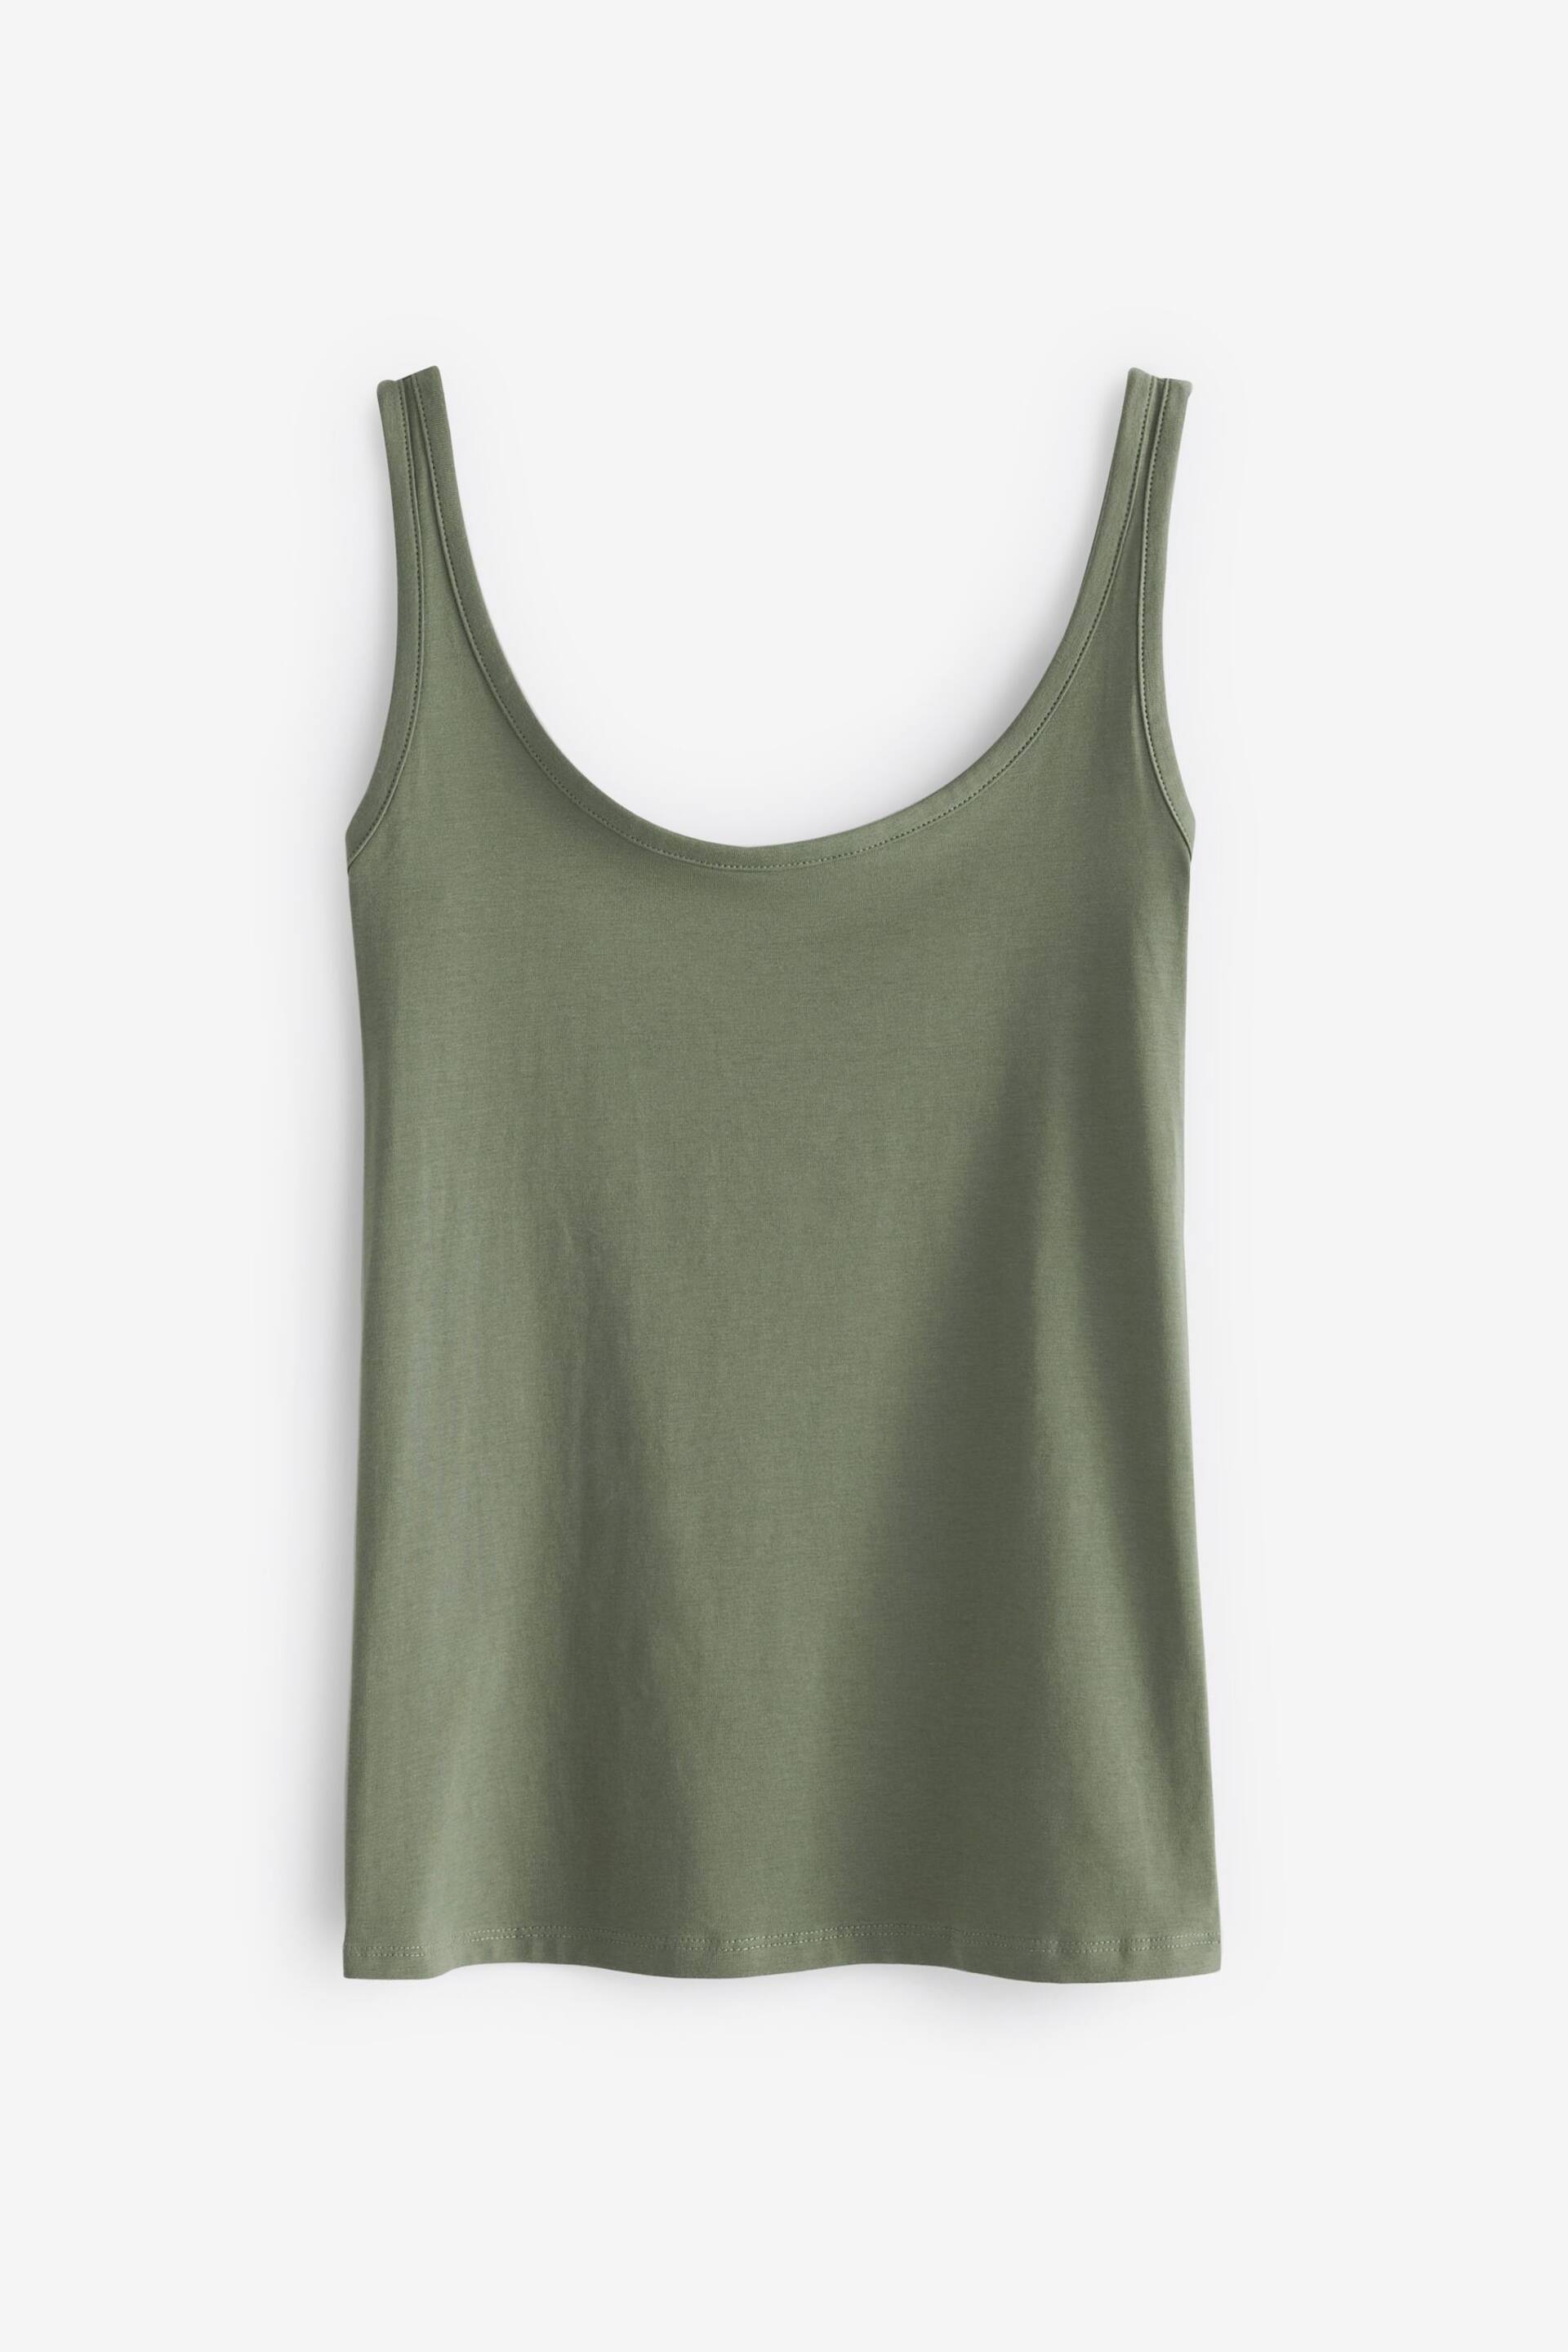 Green Khaki Thick Strap Vest - Image 4 of 4